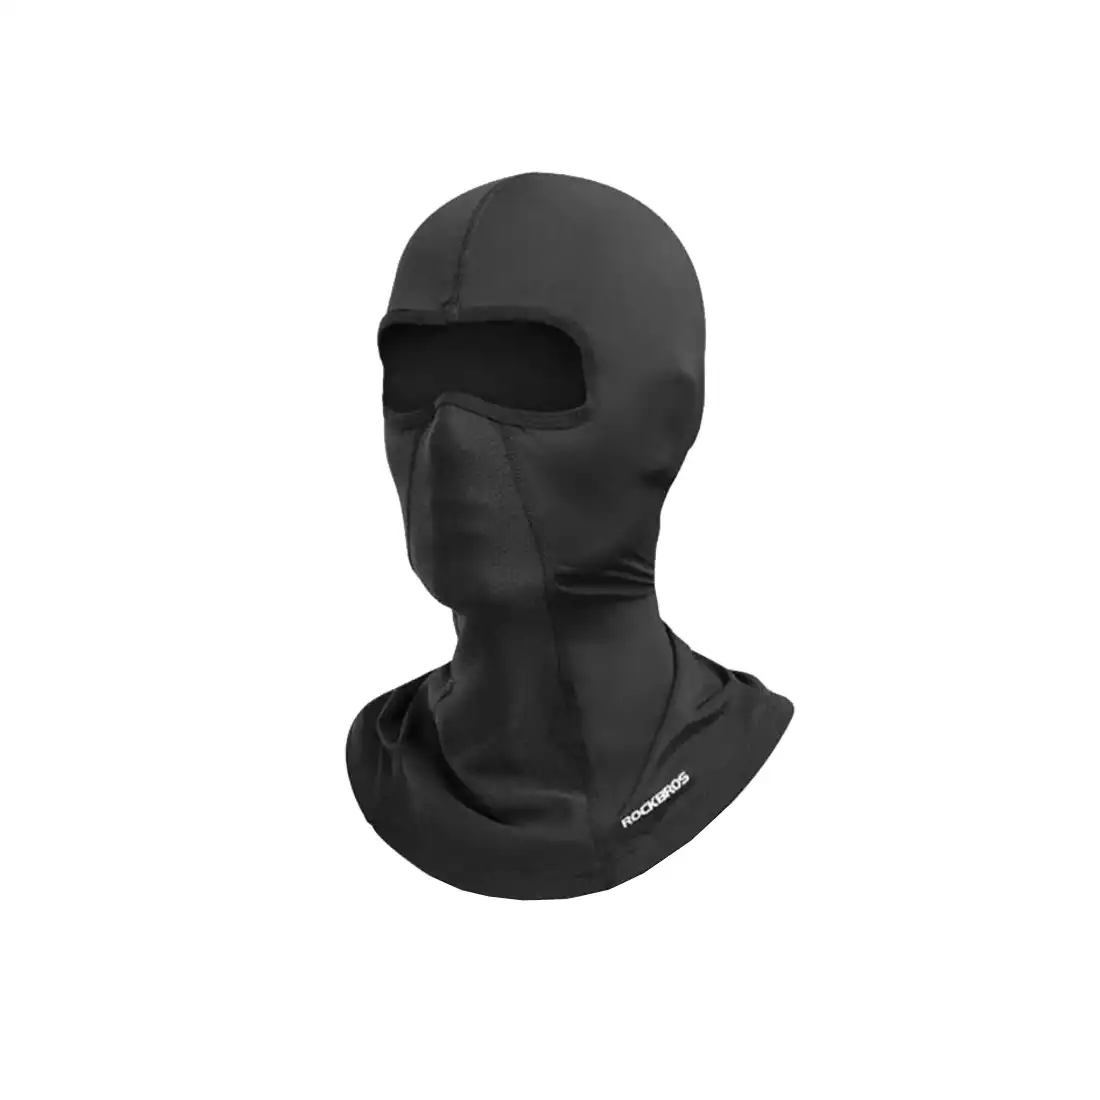 Rockbros kominiarka, maska, balaclava na twarz czarna LF8111-1